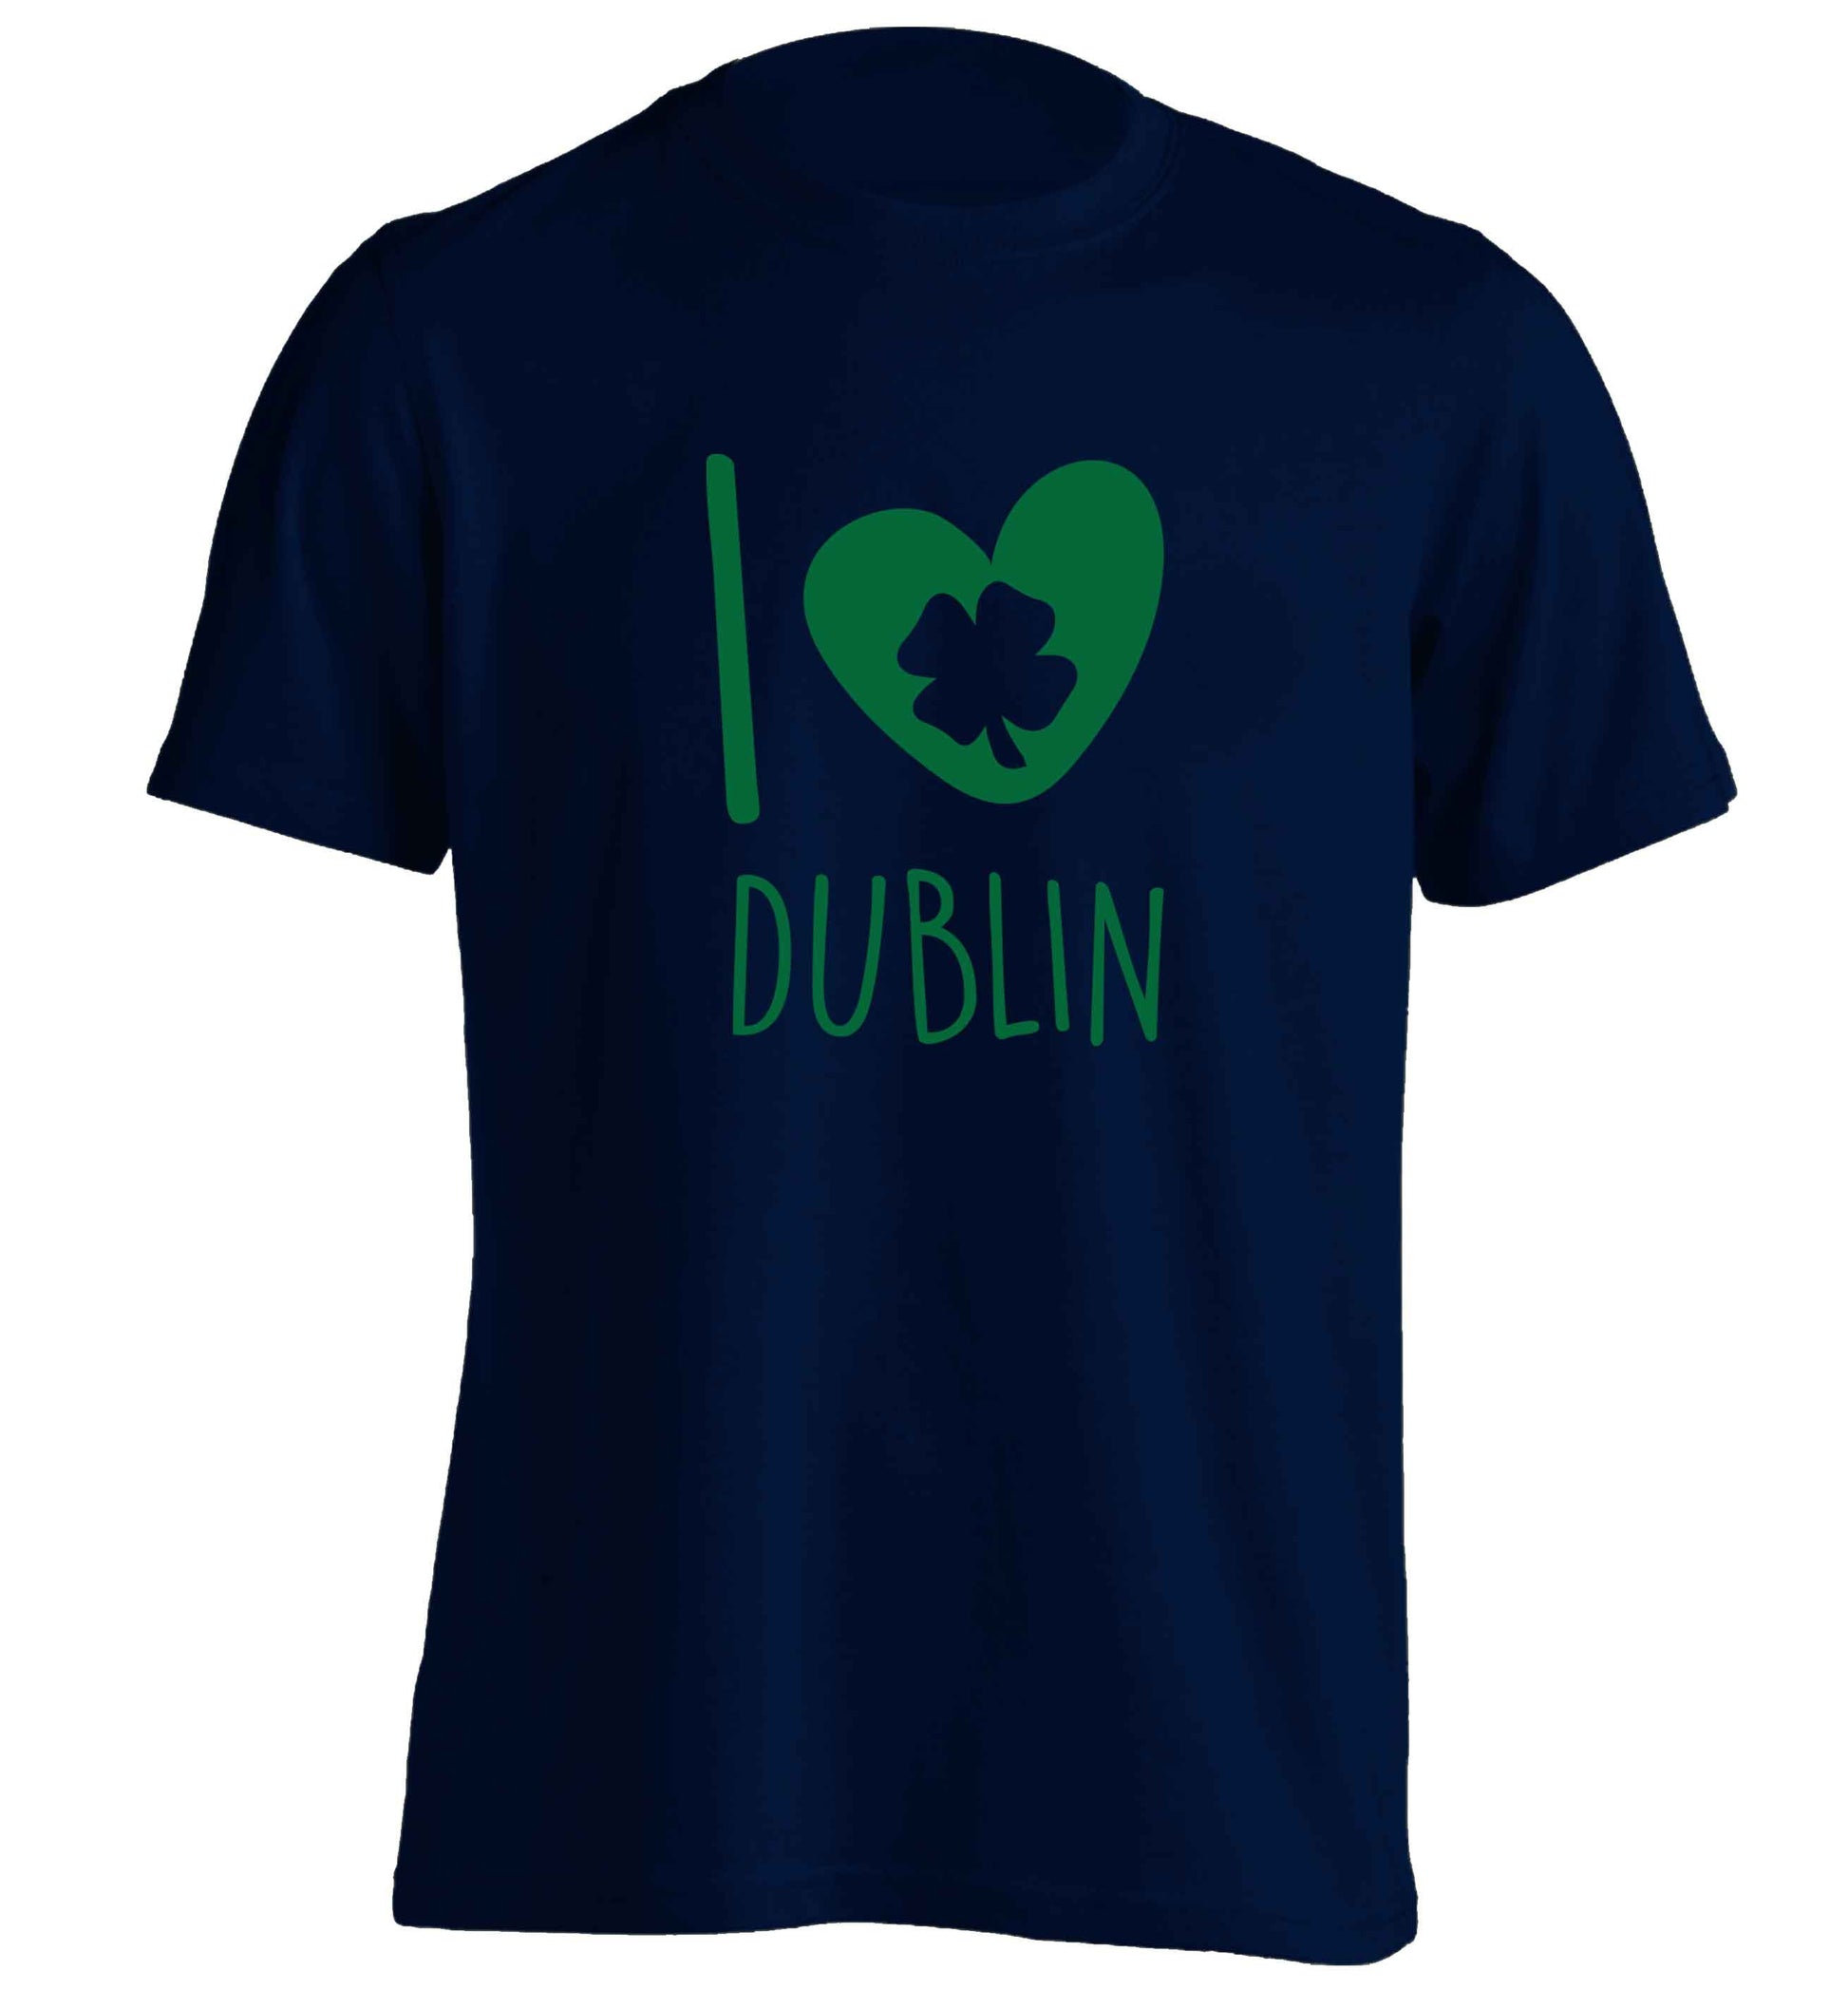 I love Dublin adults unisex navy Tshirt 2XL